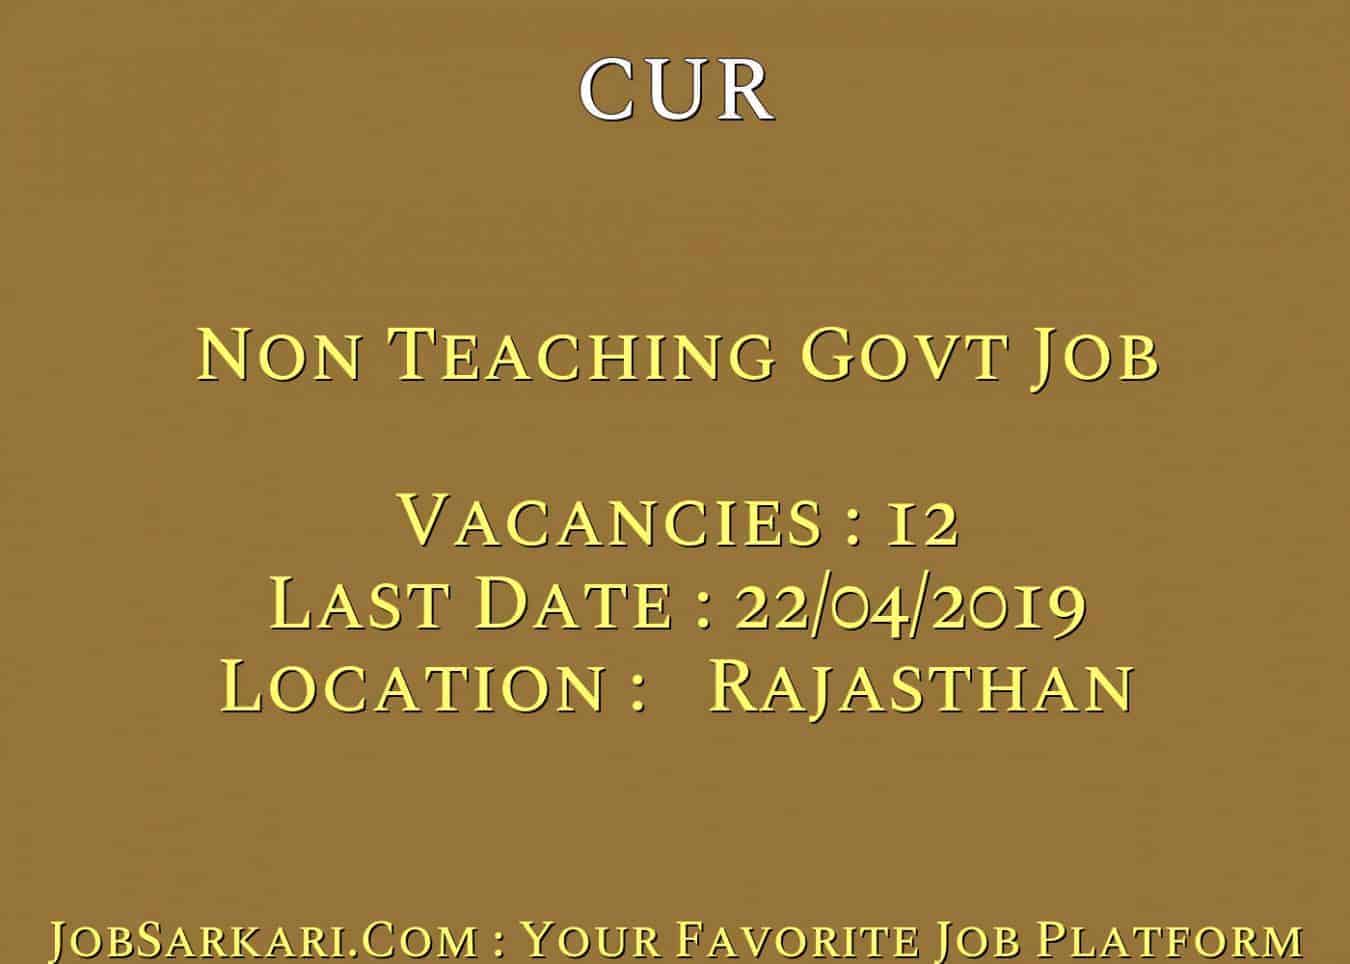 CUR Recruitment 2019 For Non Teaching Govt Job